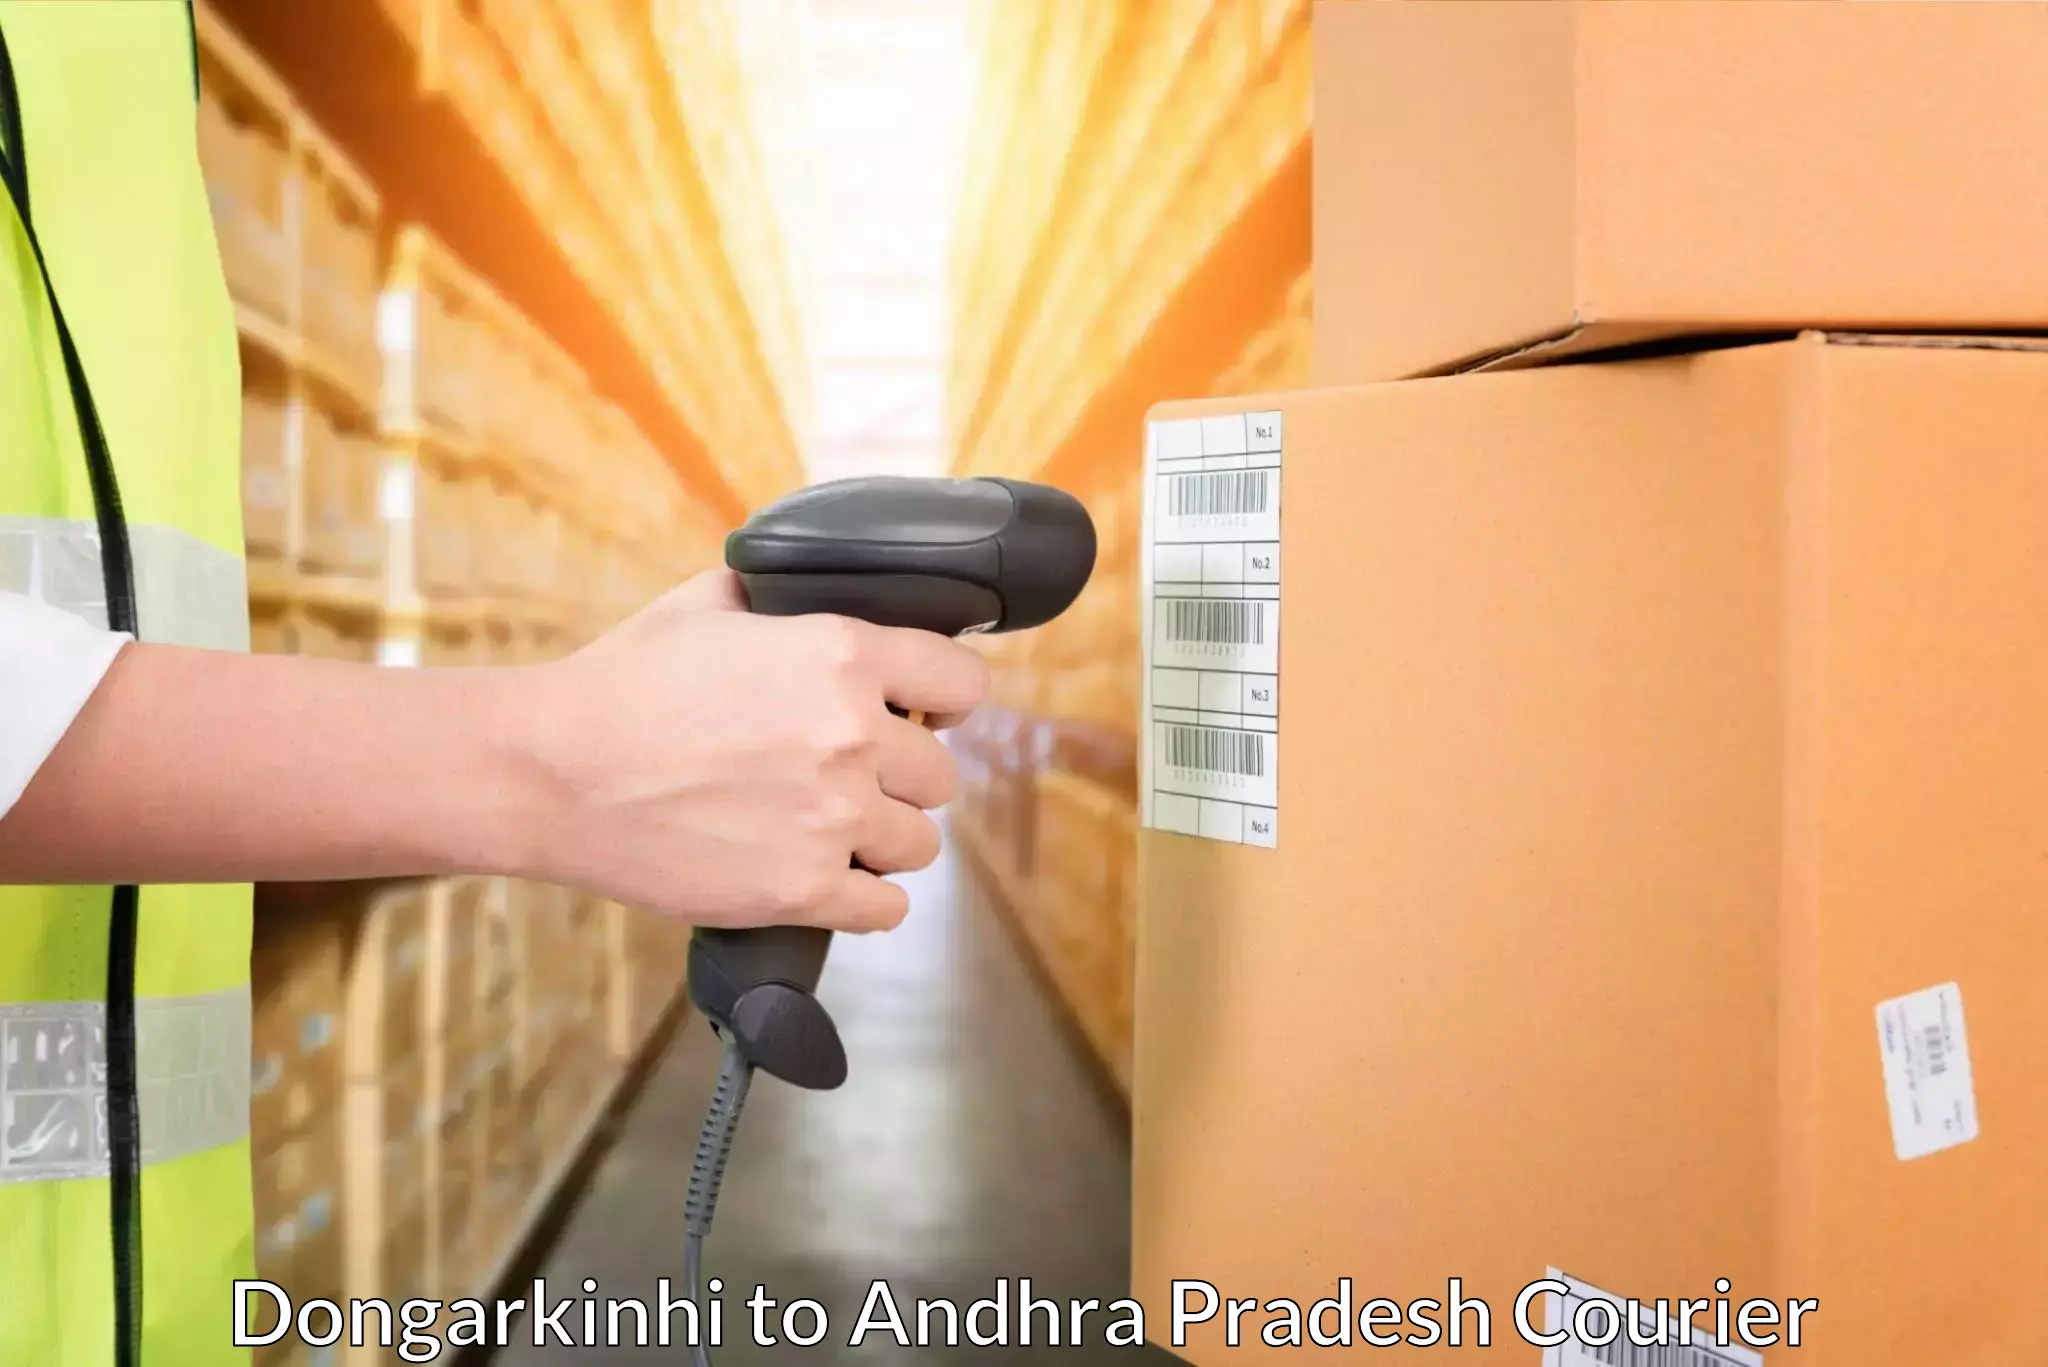 Corporate courier solutions Dongarkinhi to Malikipuram